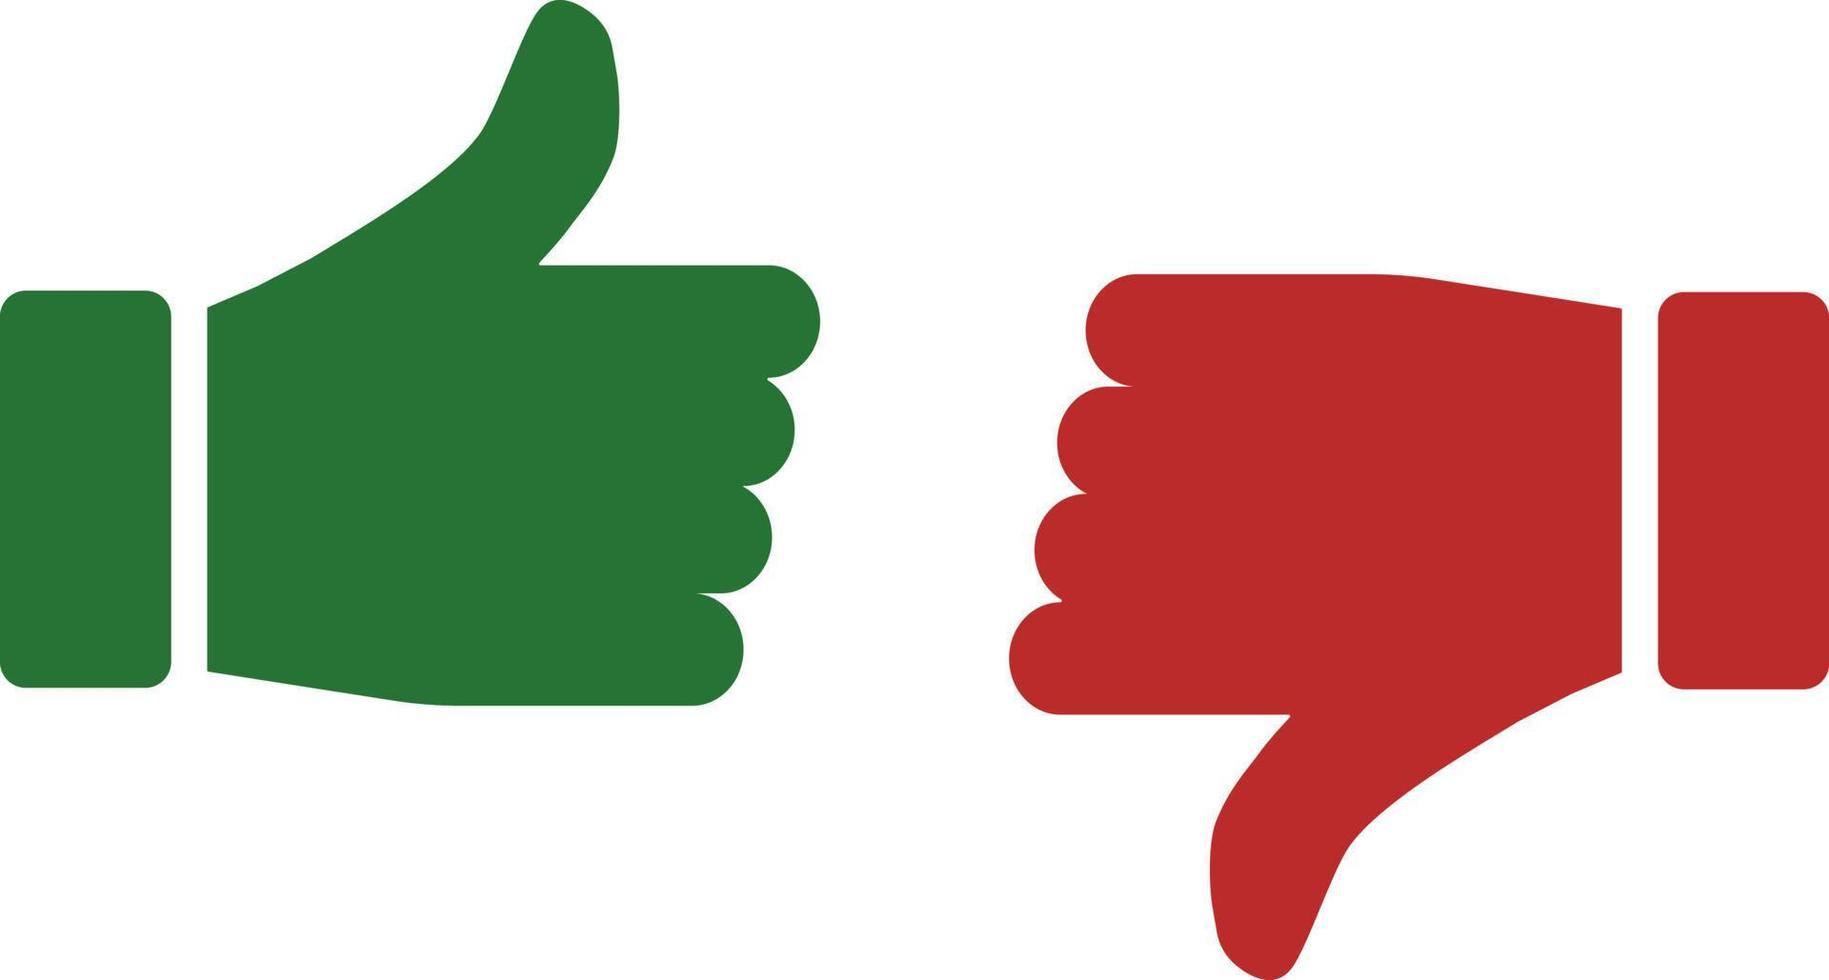 Thumb up and thumb down, vector. The thumbs up and thumbs down icons are green and red. vector